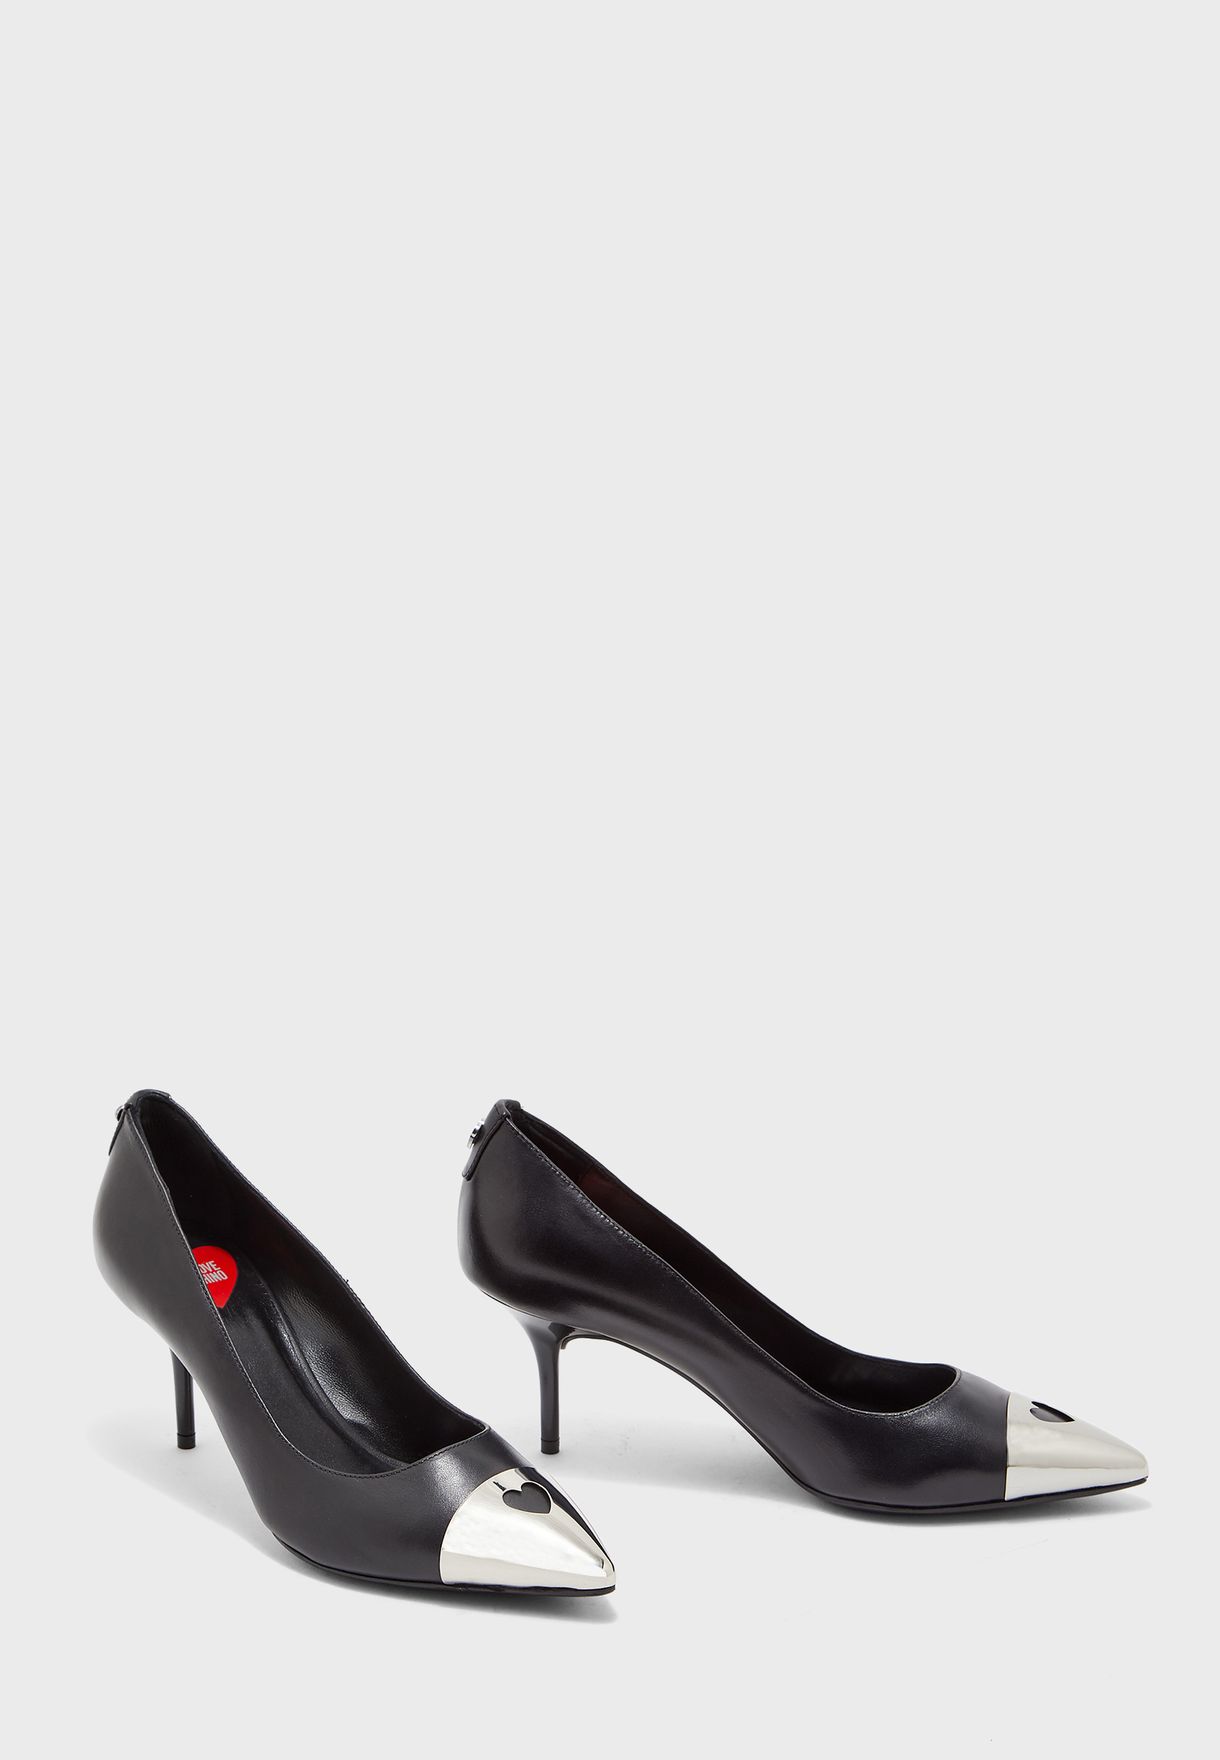 moschino black heels